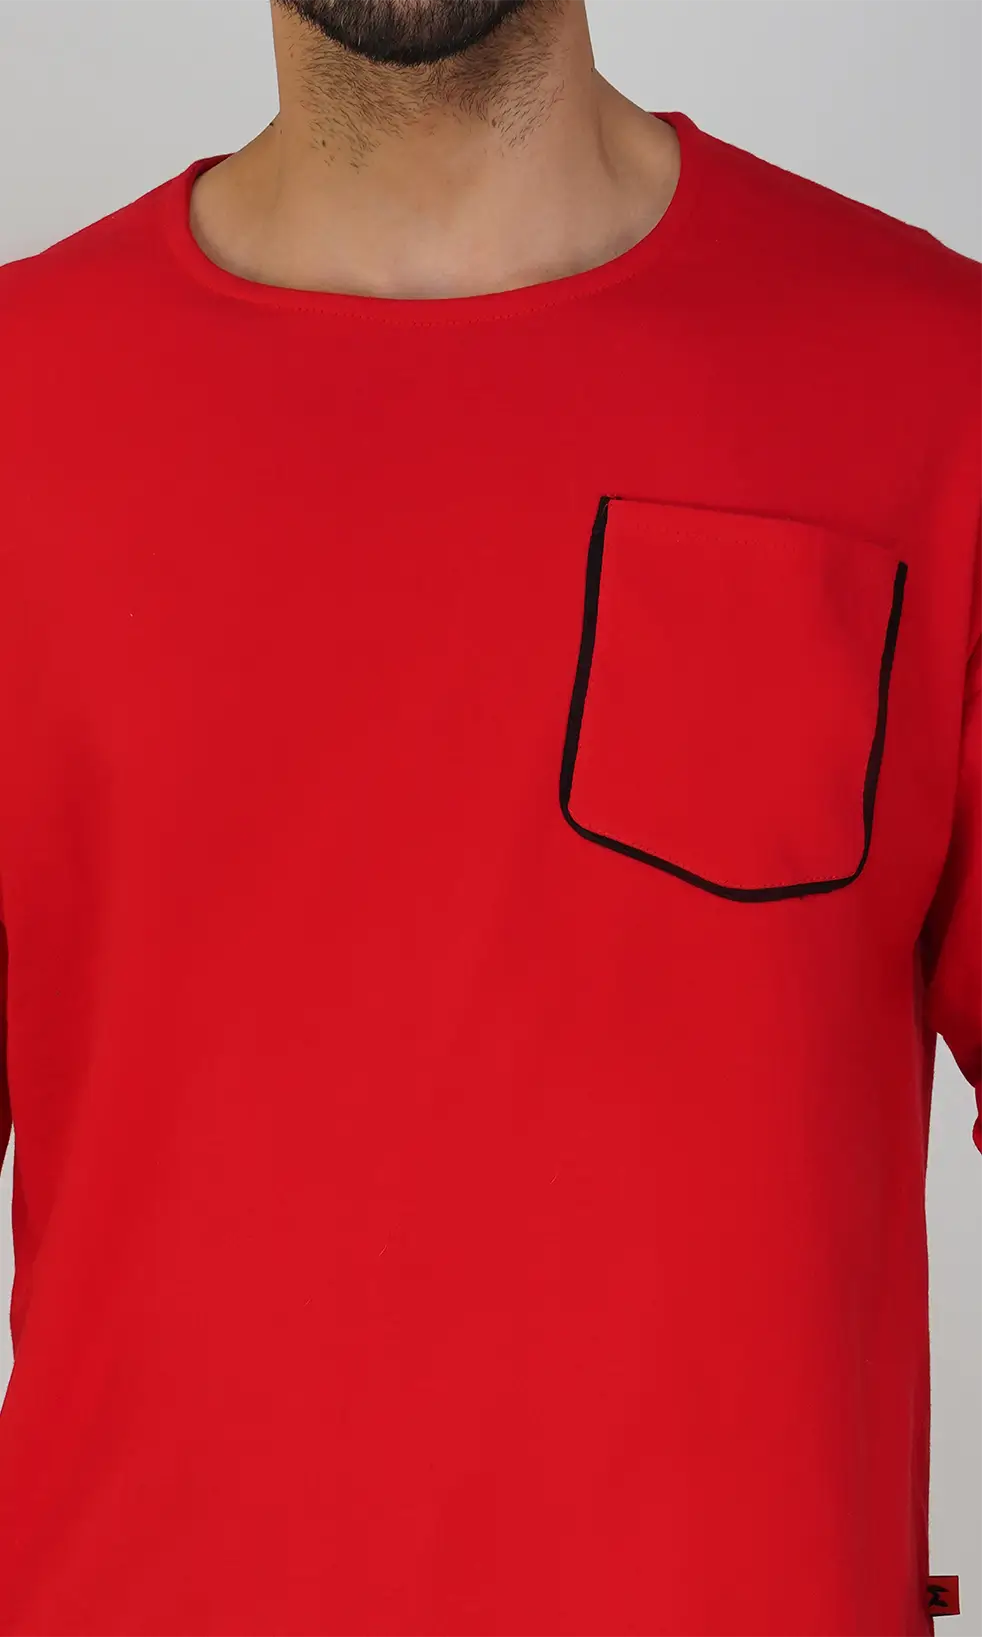 Mebadass Men's ColorBlocked OverSized Hippie T-shirts - Red & Black